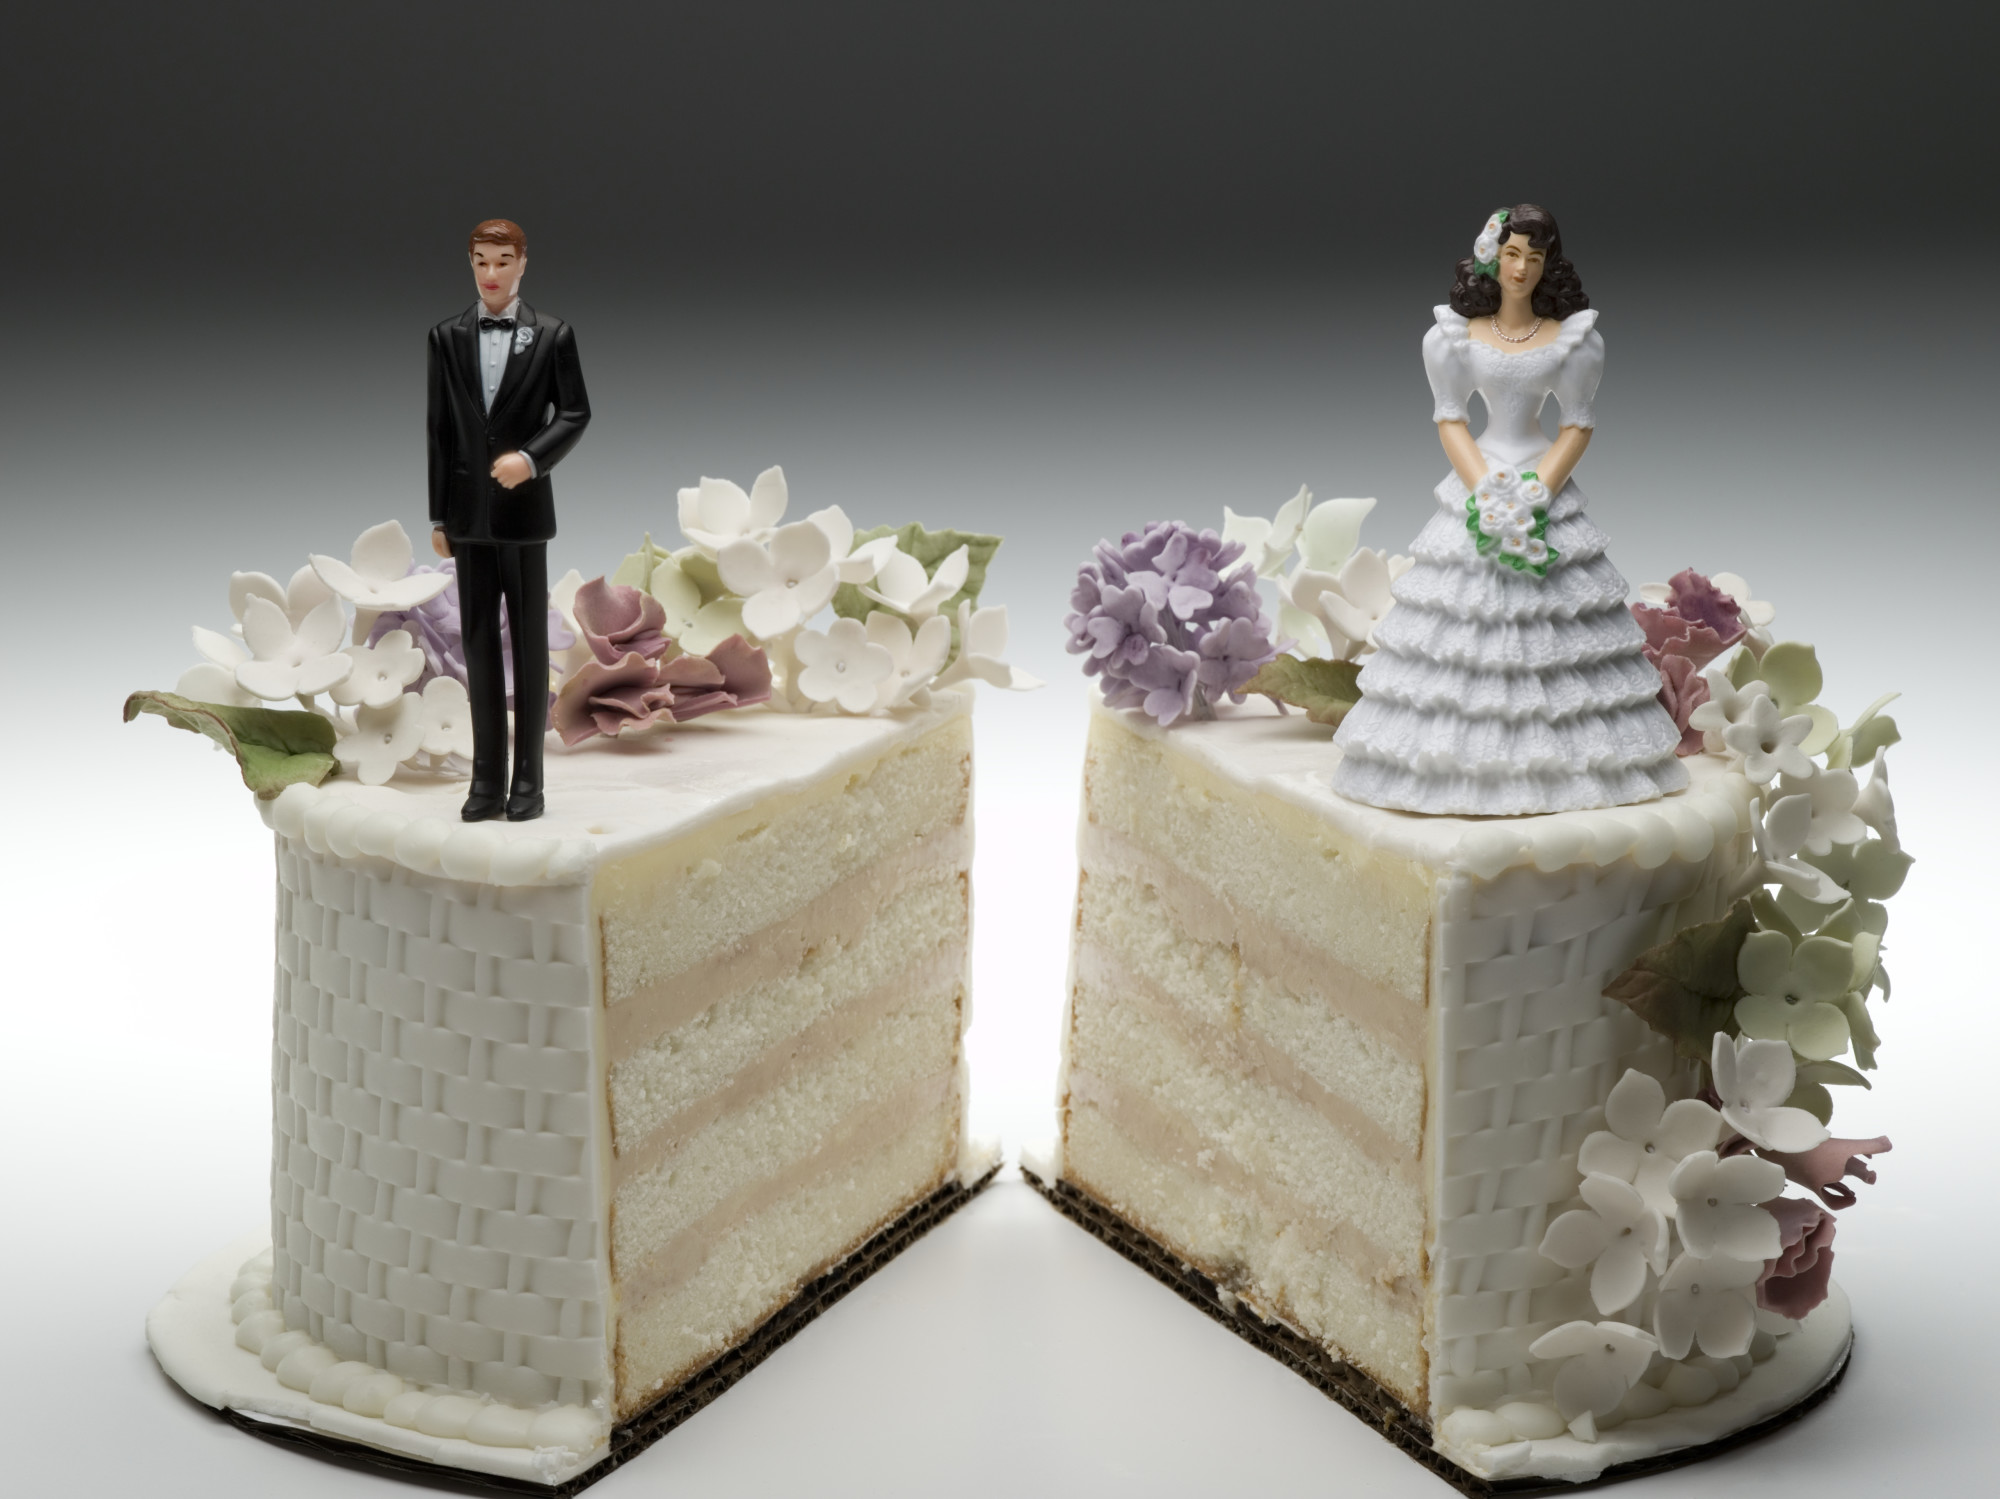 Divorce Visualized by a Split Wedding Cake